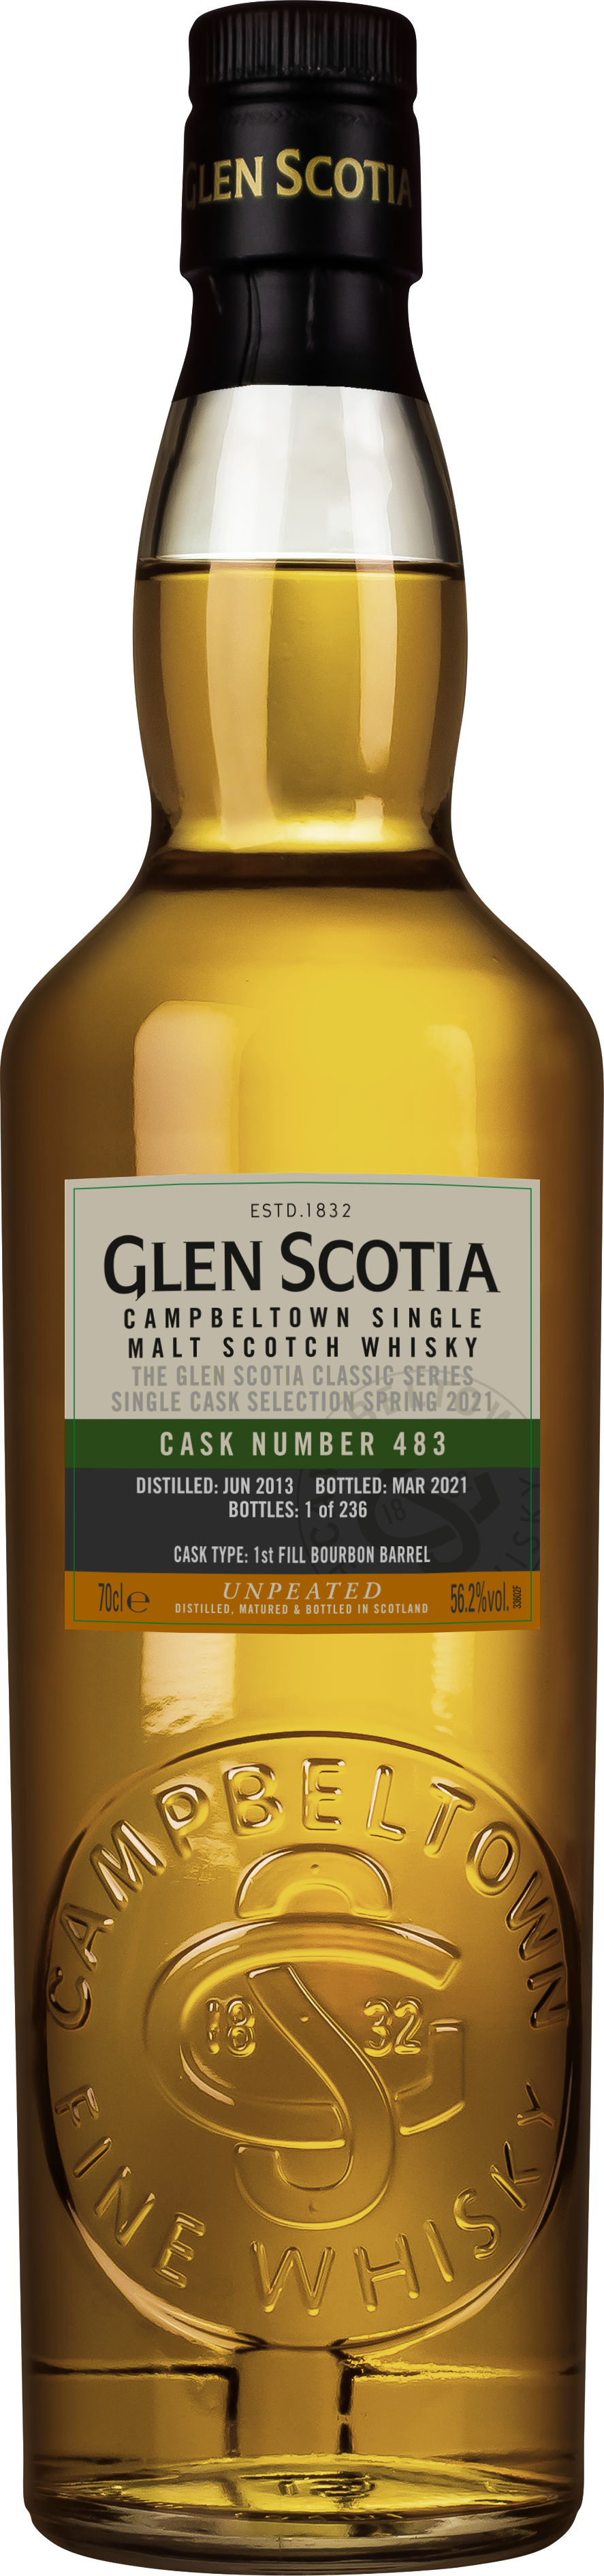 Glen Scotia Vintage 2013 1st Fill Bourbon #6